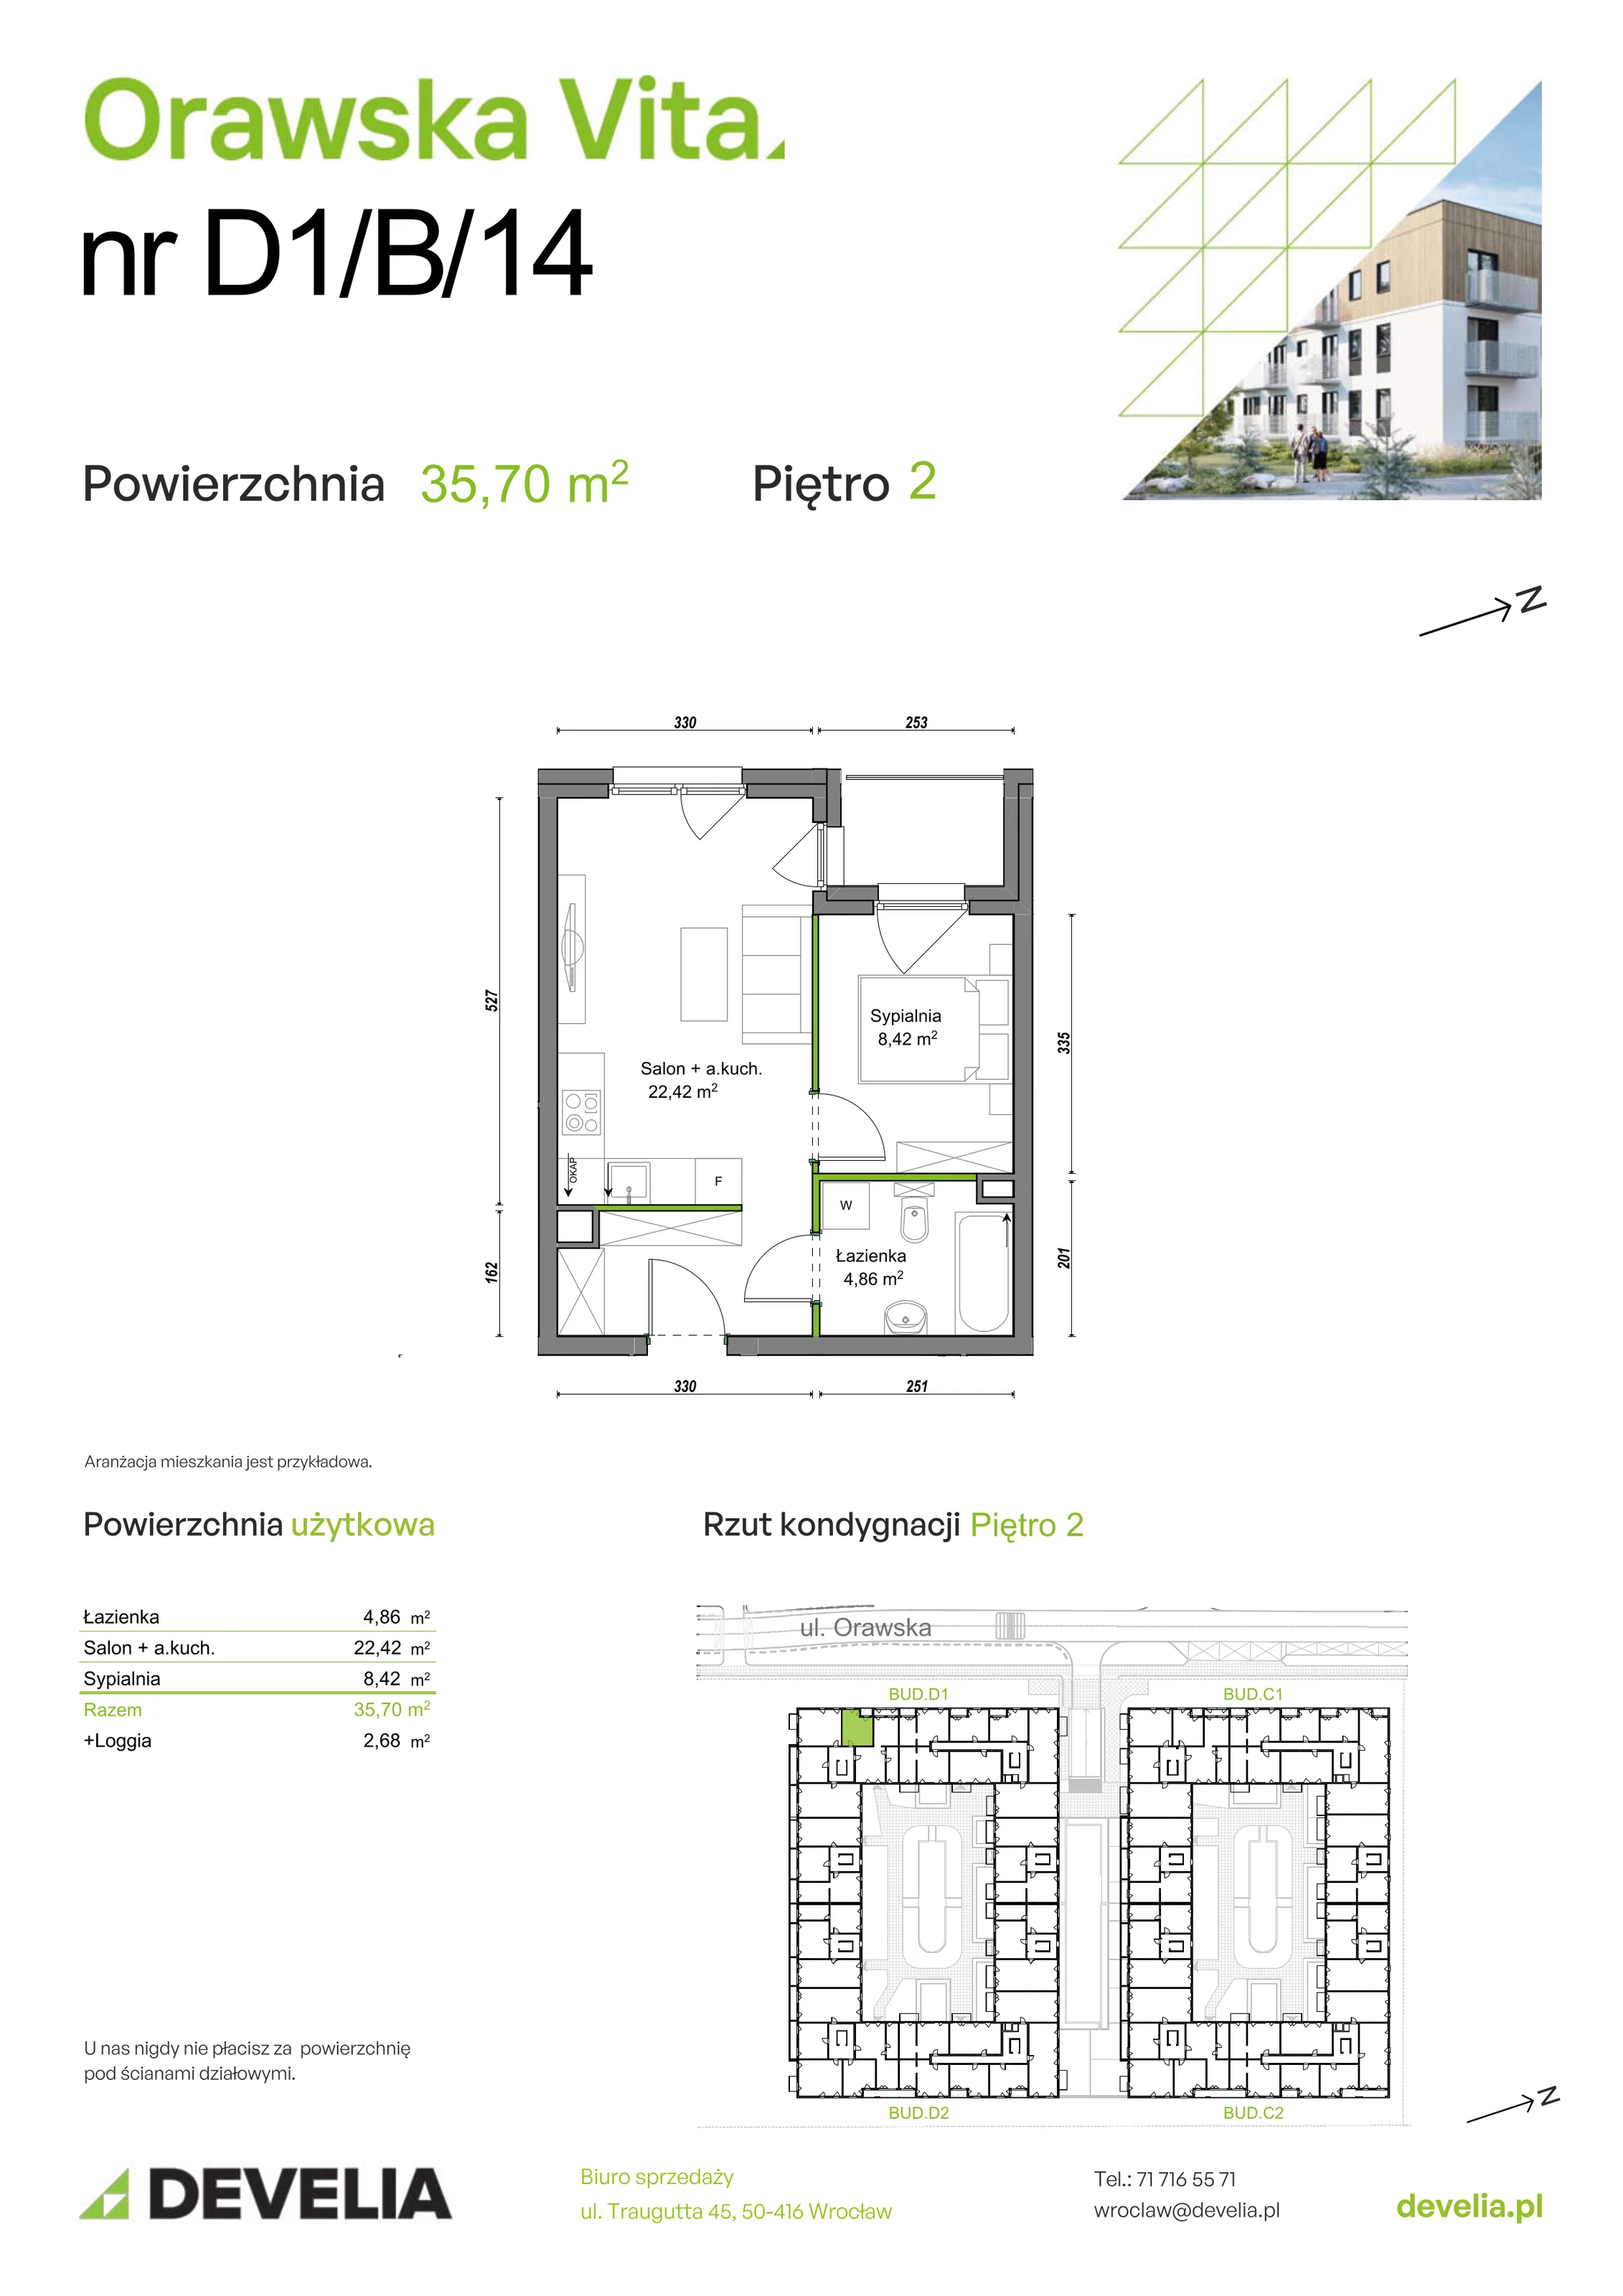 Mieszkanie 35,70 m², piętro 2, oferta nr D1/B/14, Orawska Vita, Wrocław, Ołtaszyn, Krzyki, ul. Orawska 73